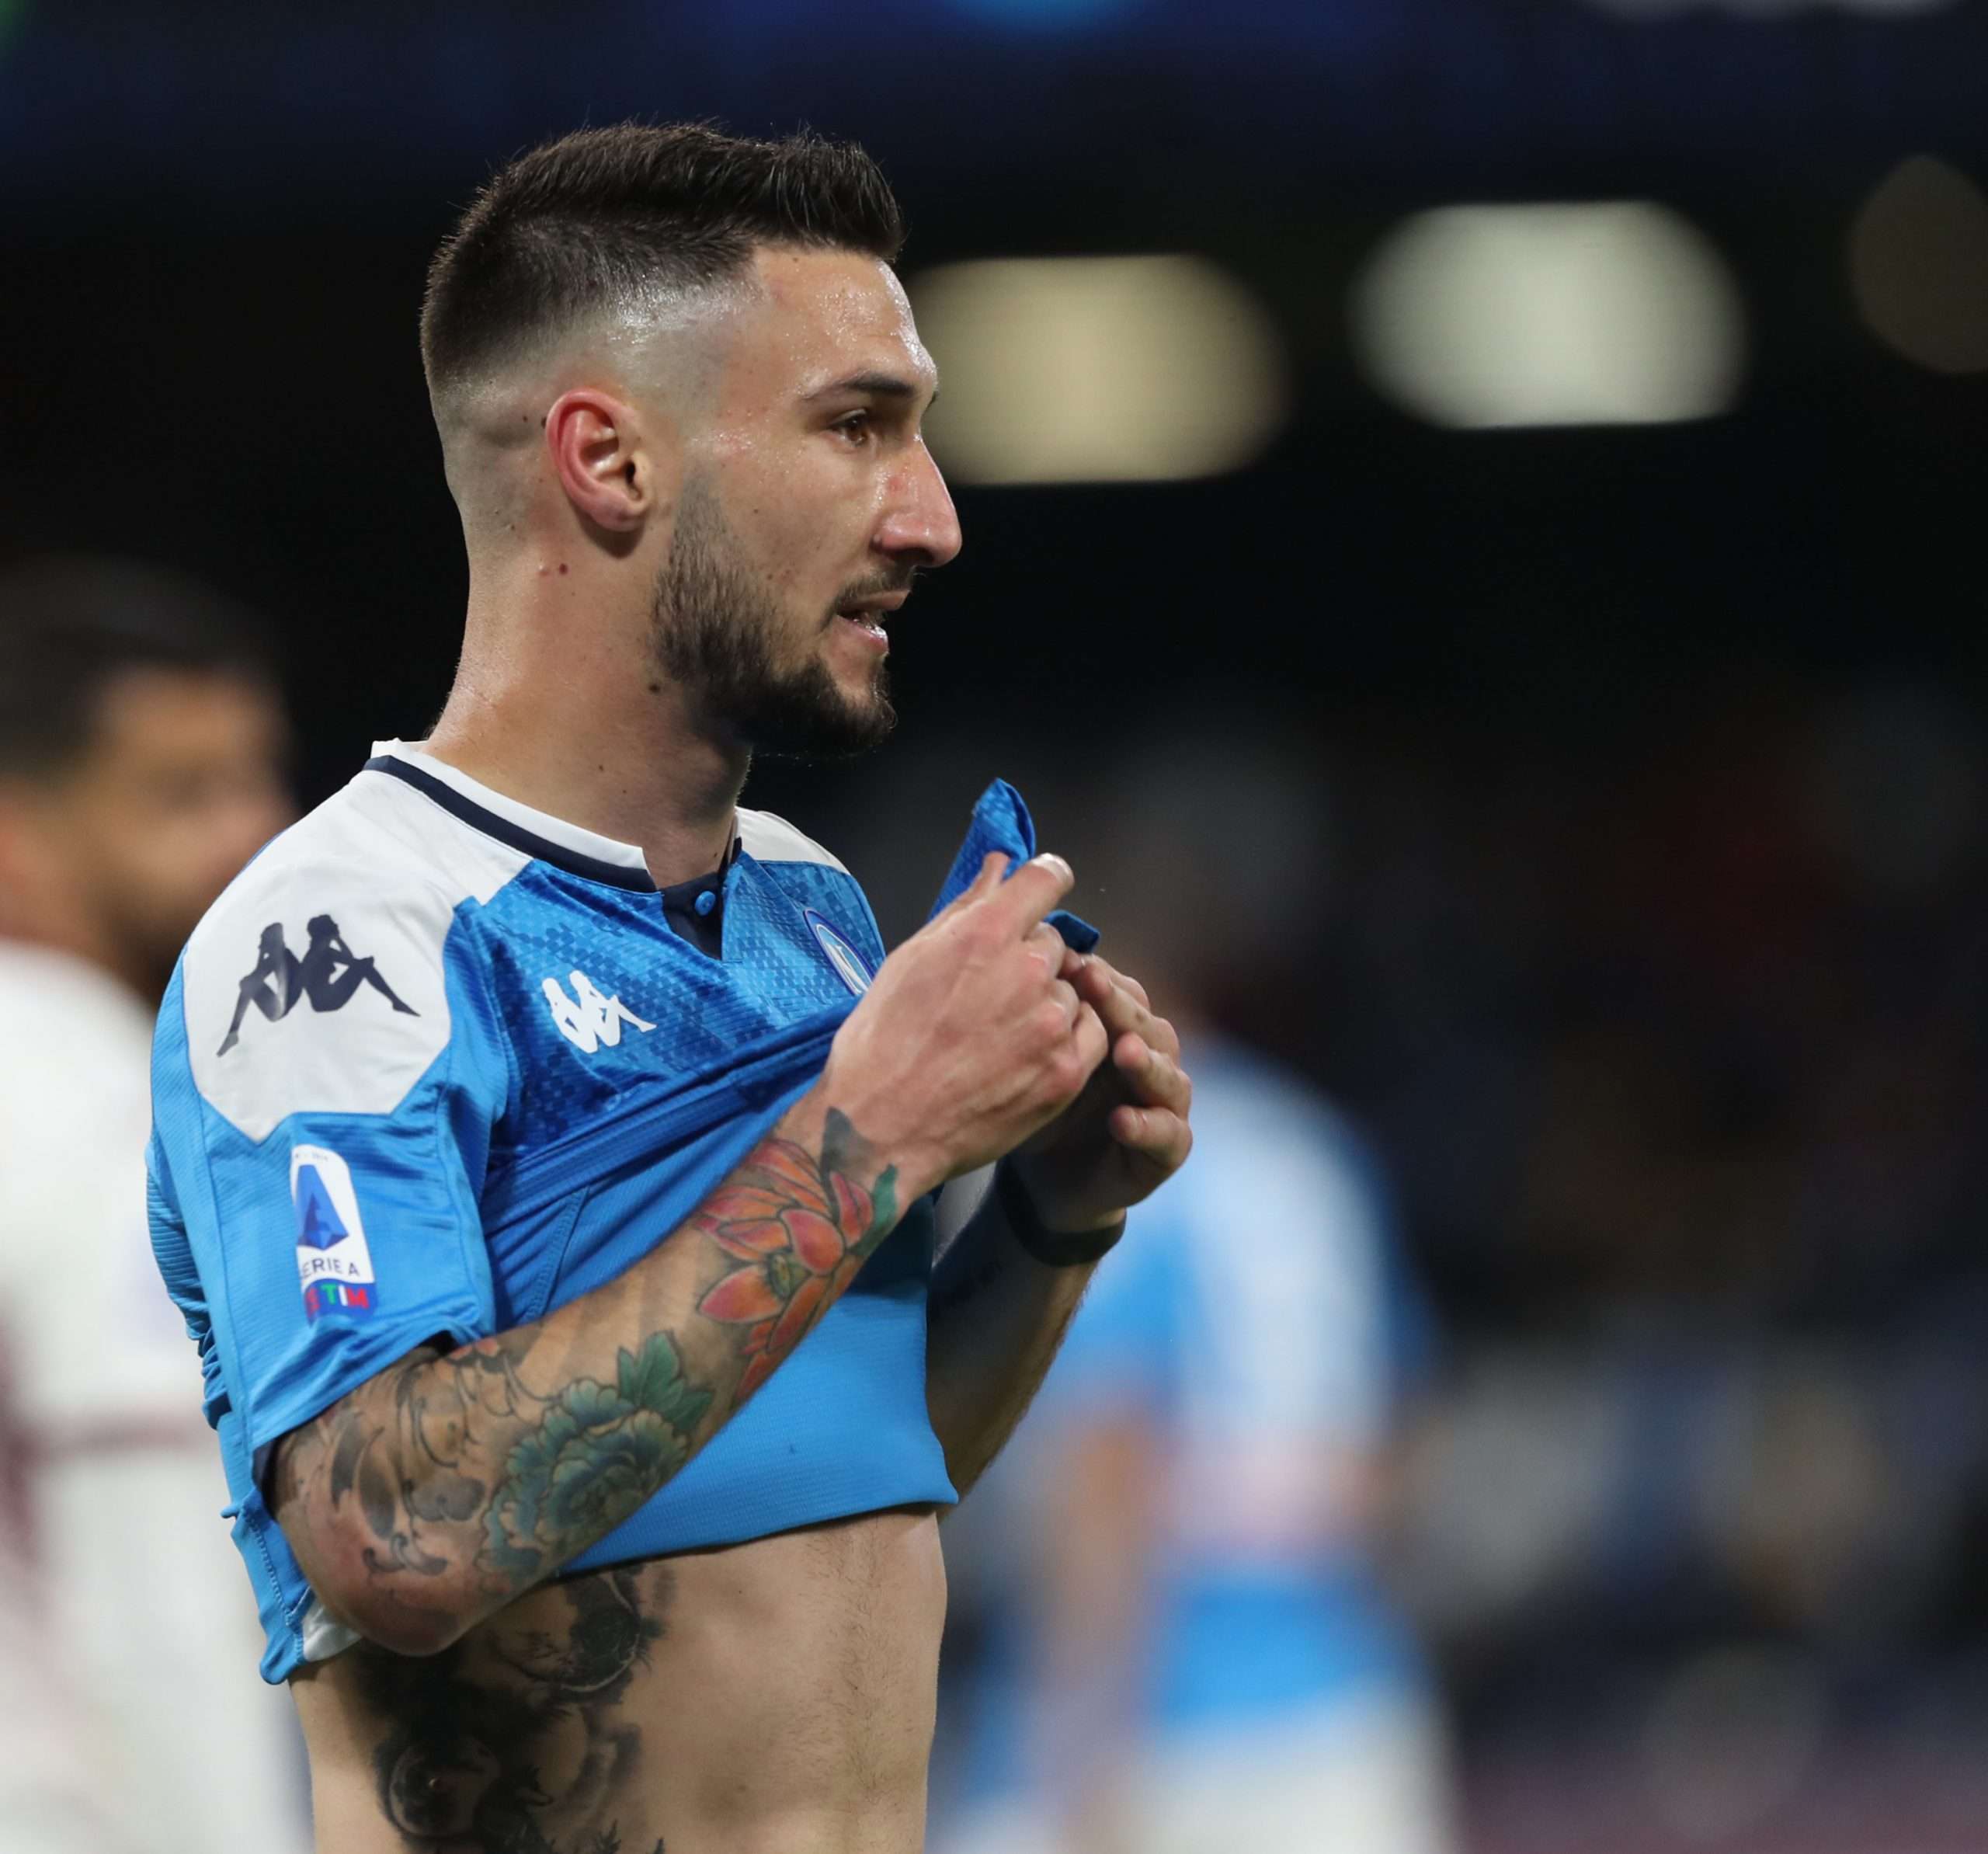 ESPN FC on Instagram: Napoli's Matteo Politano and Lyon's Memphis